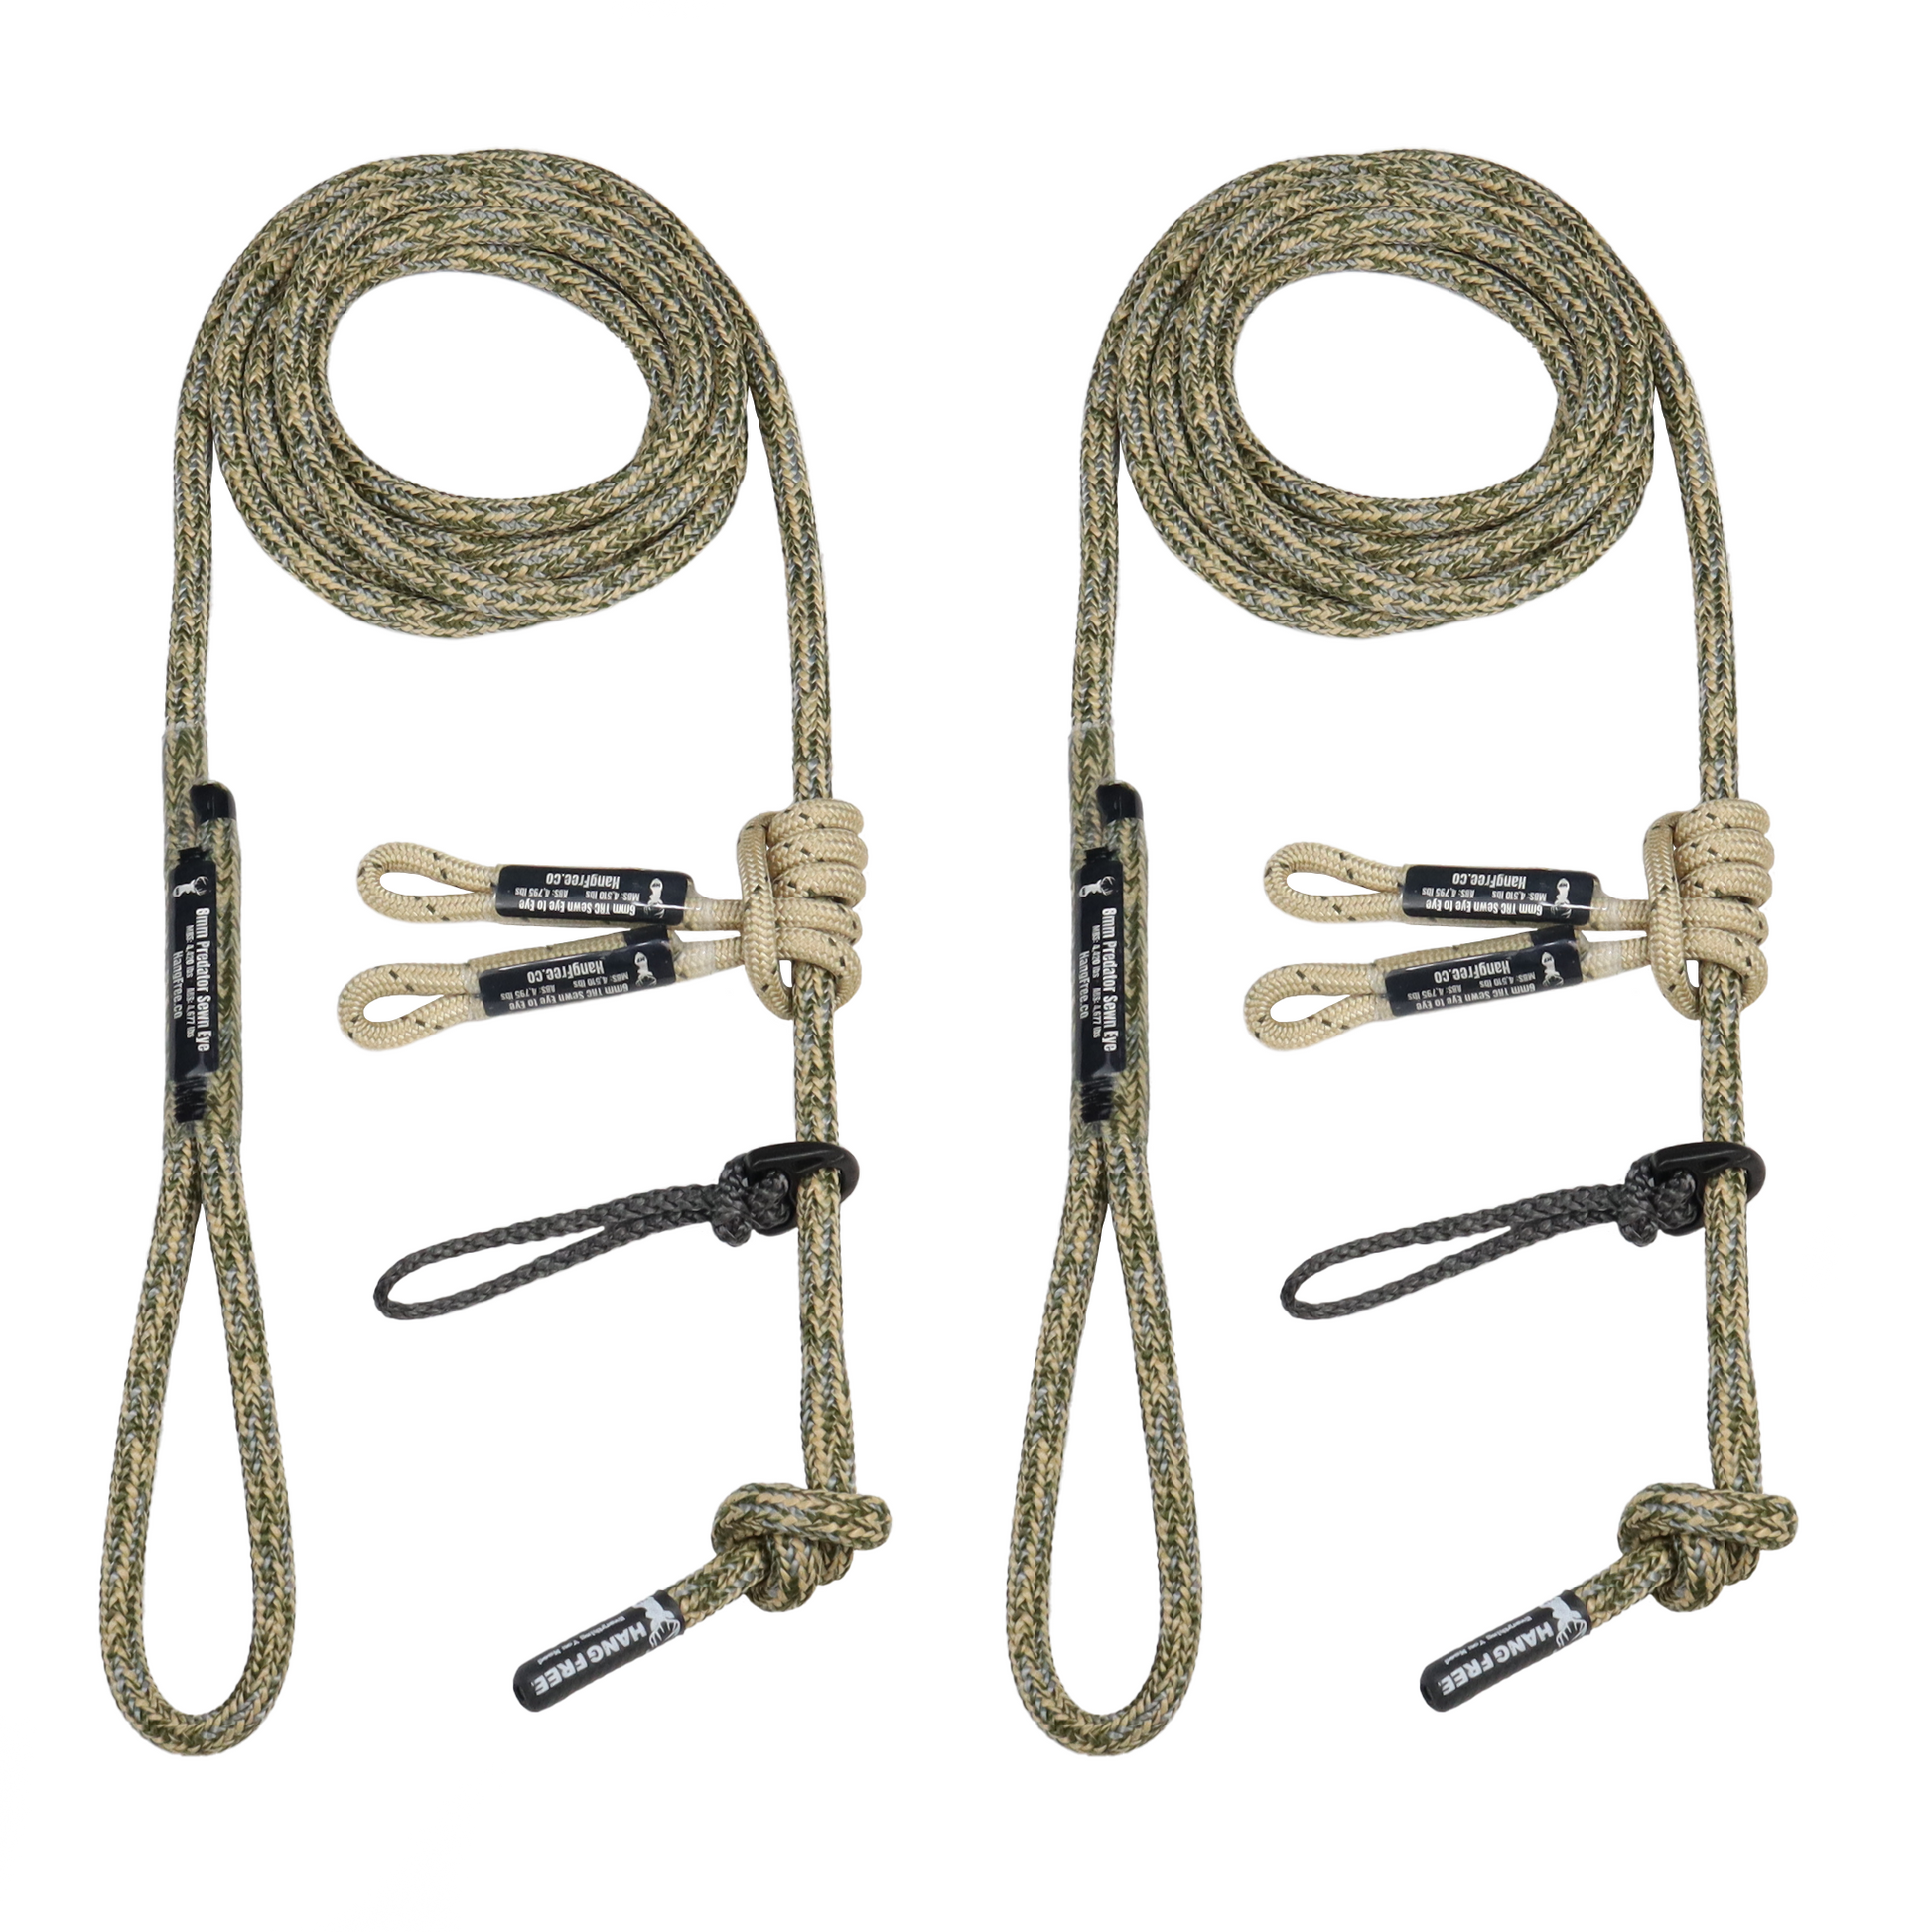 8mm Predator Rope Tether & Lineman's Package in Desert Camo